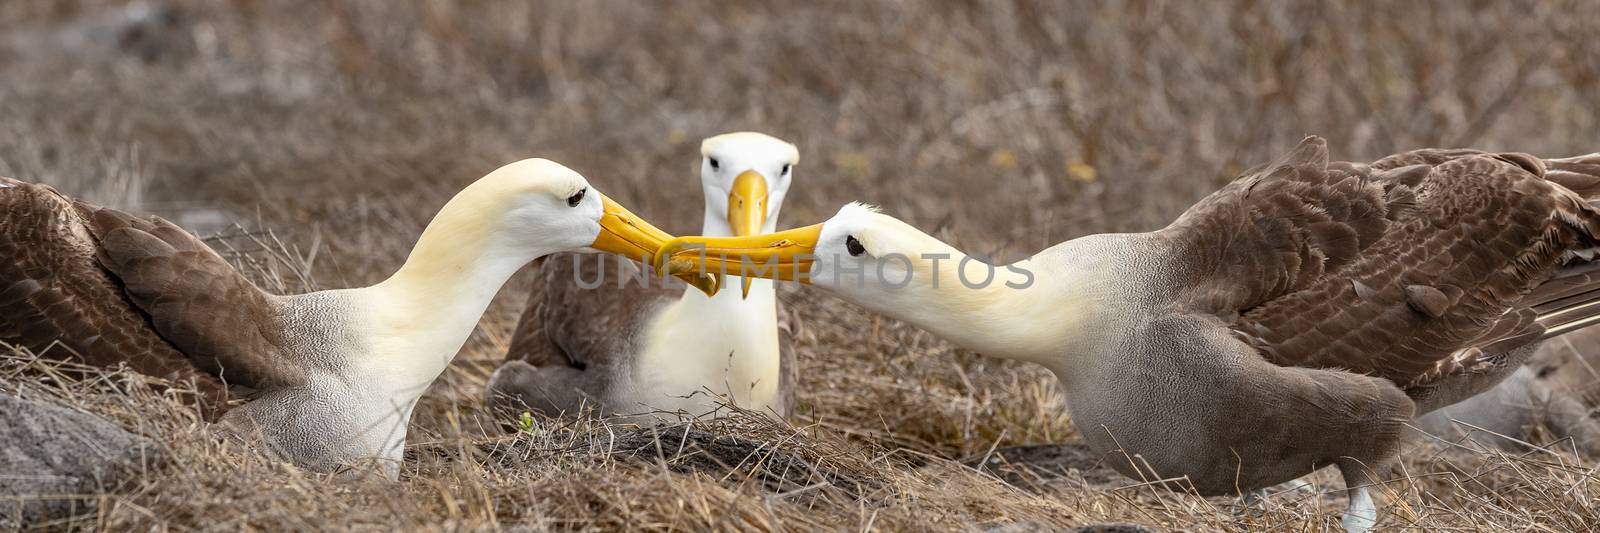 Galapagos Albatross aka Waved albatrosses mating dance courtship ritual by Maridav